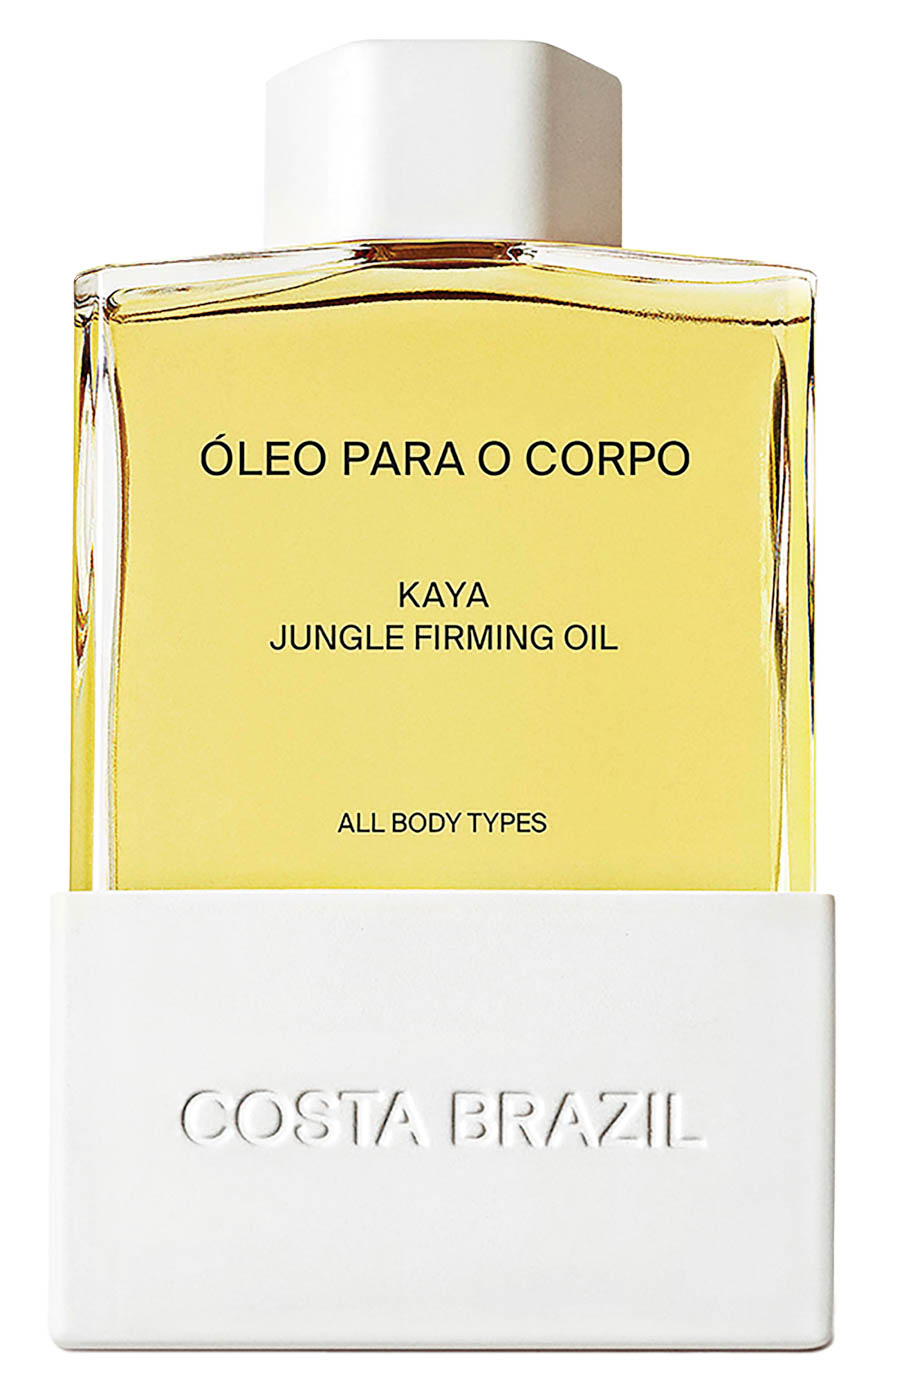 30 Costa Brazil, Kaya Jungle Firming Oil, Nordstrom.com